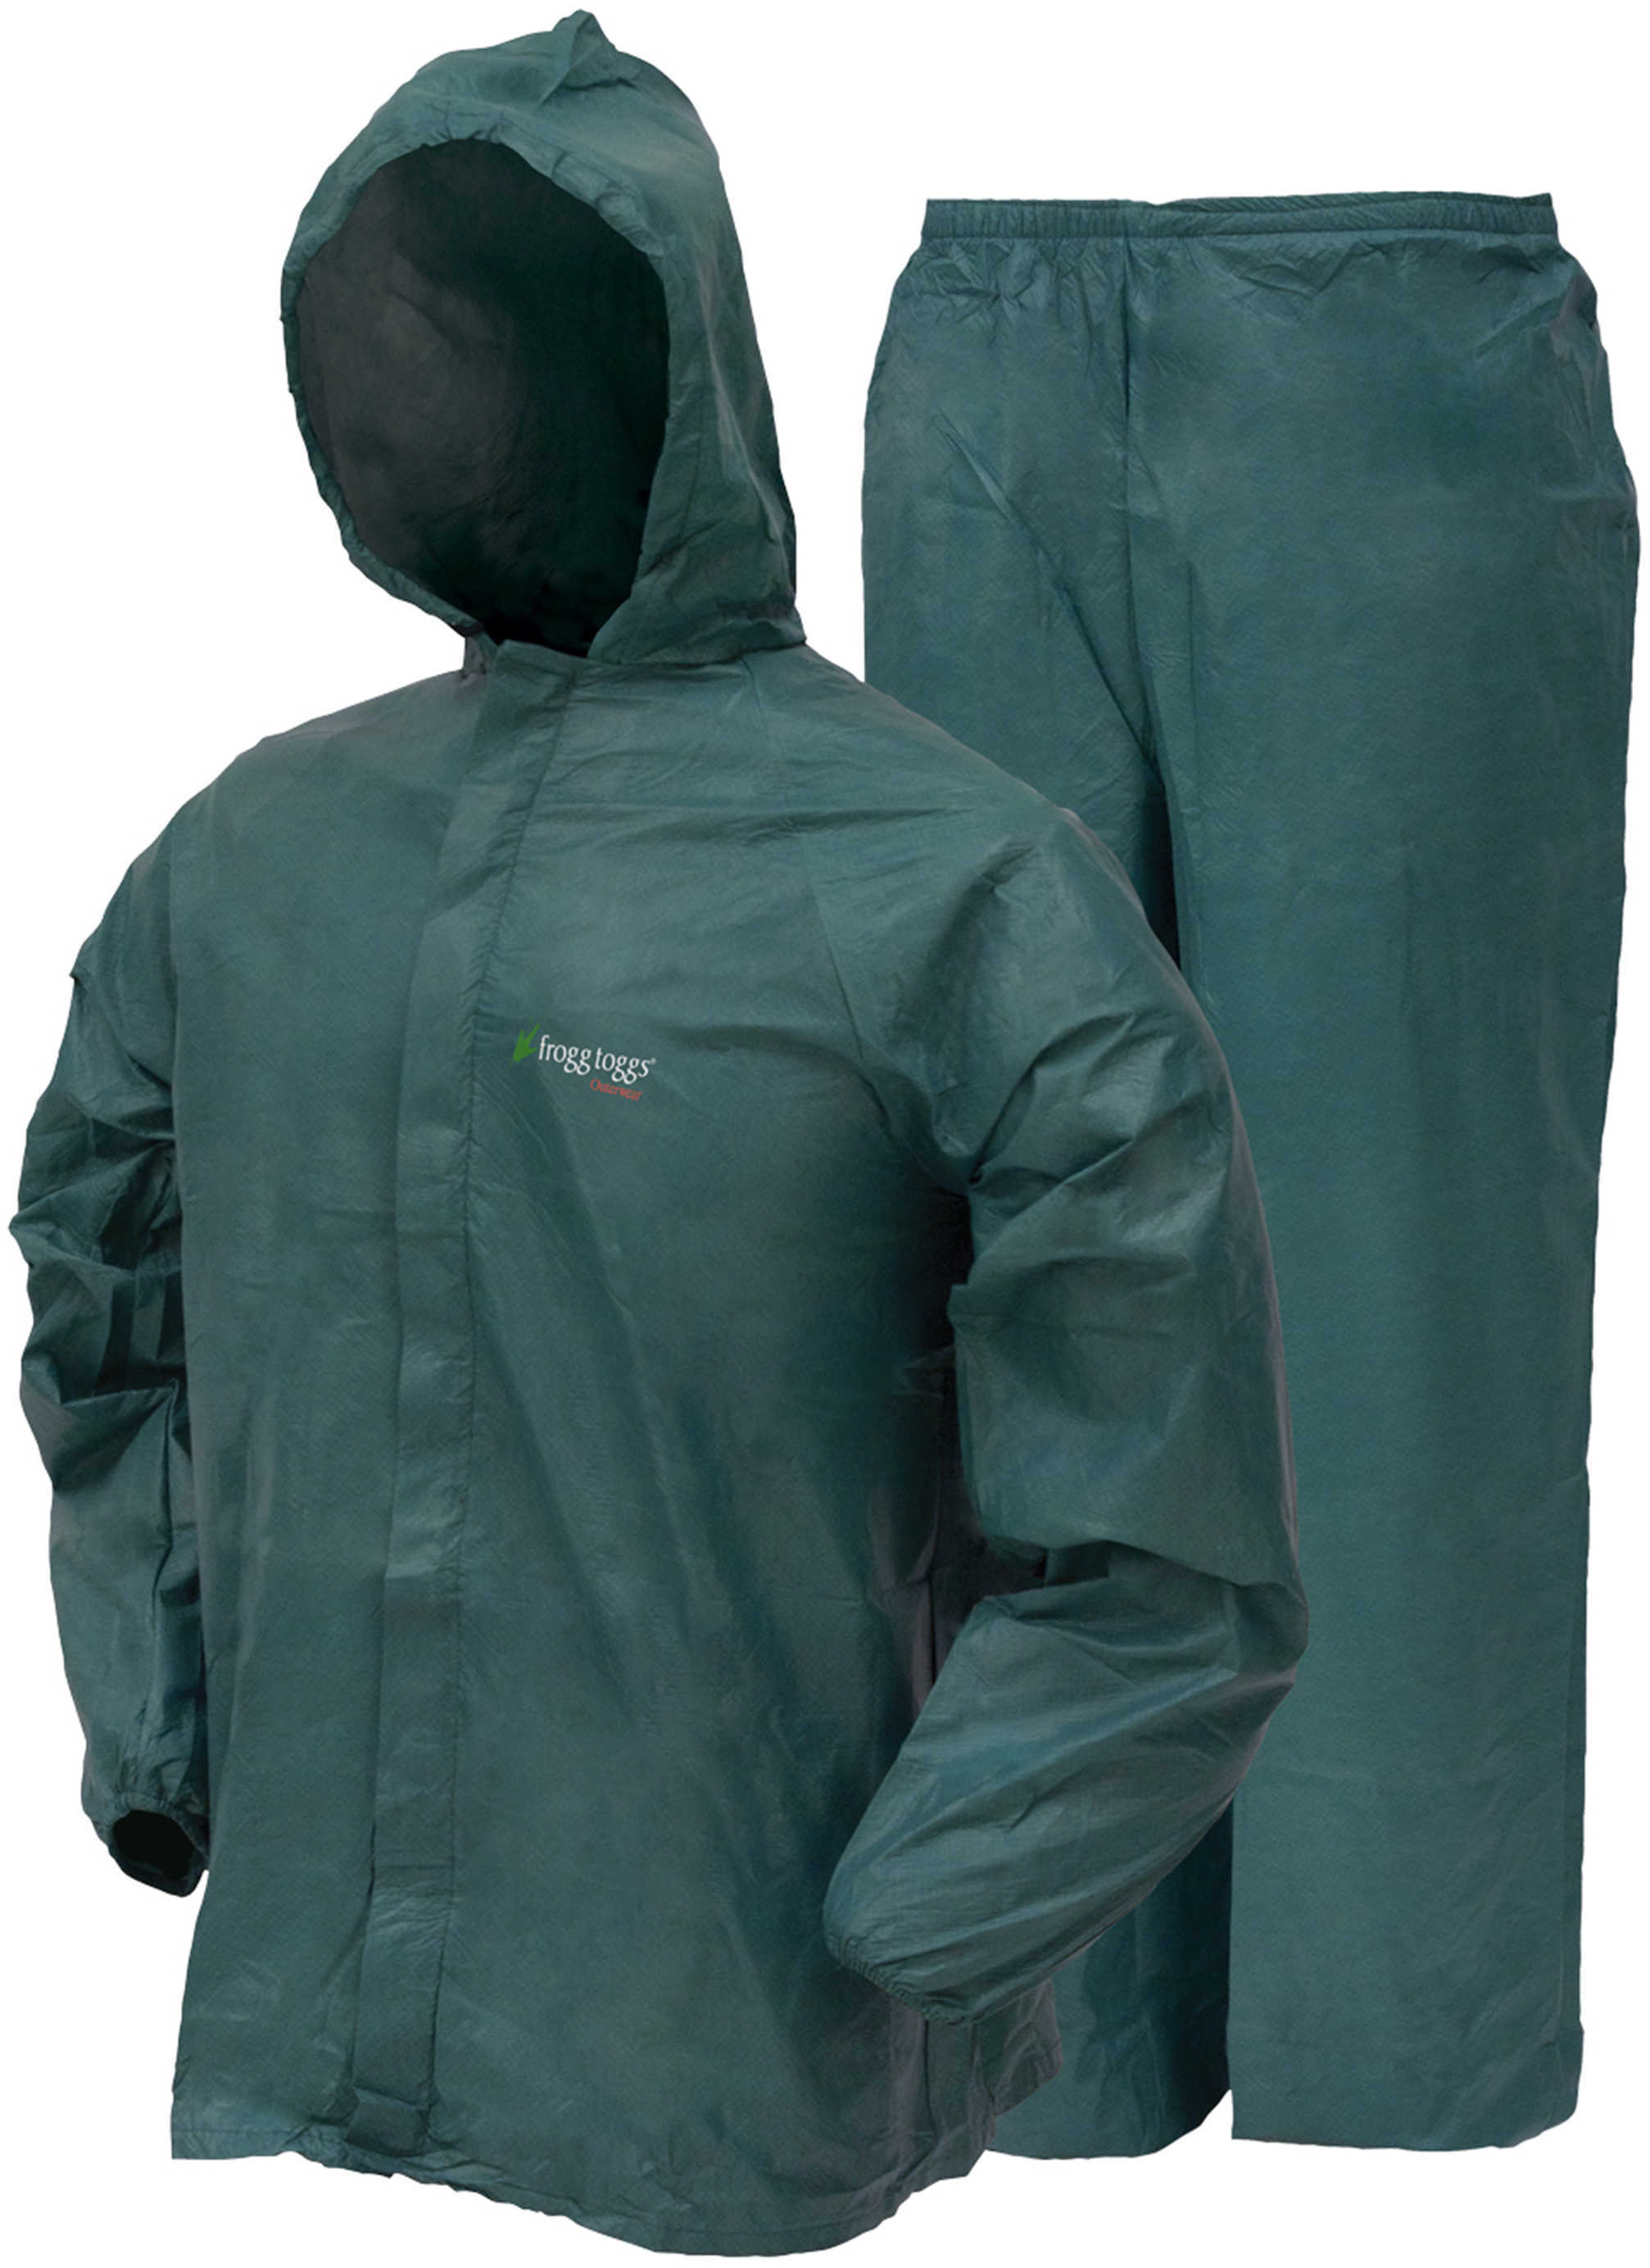 Frogg Toggs Ultra-Lite2 Rain Suit w/Stuff Sack Large, Green UL12104-09LG